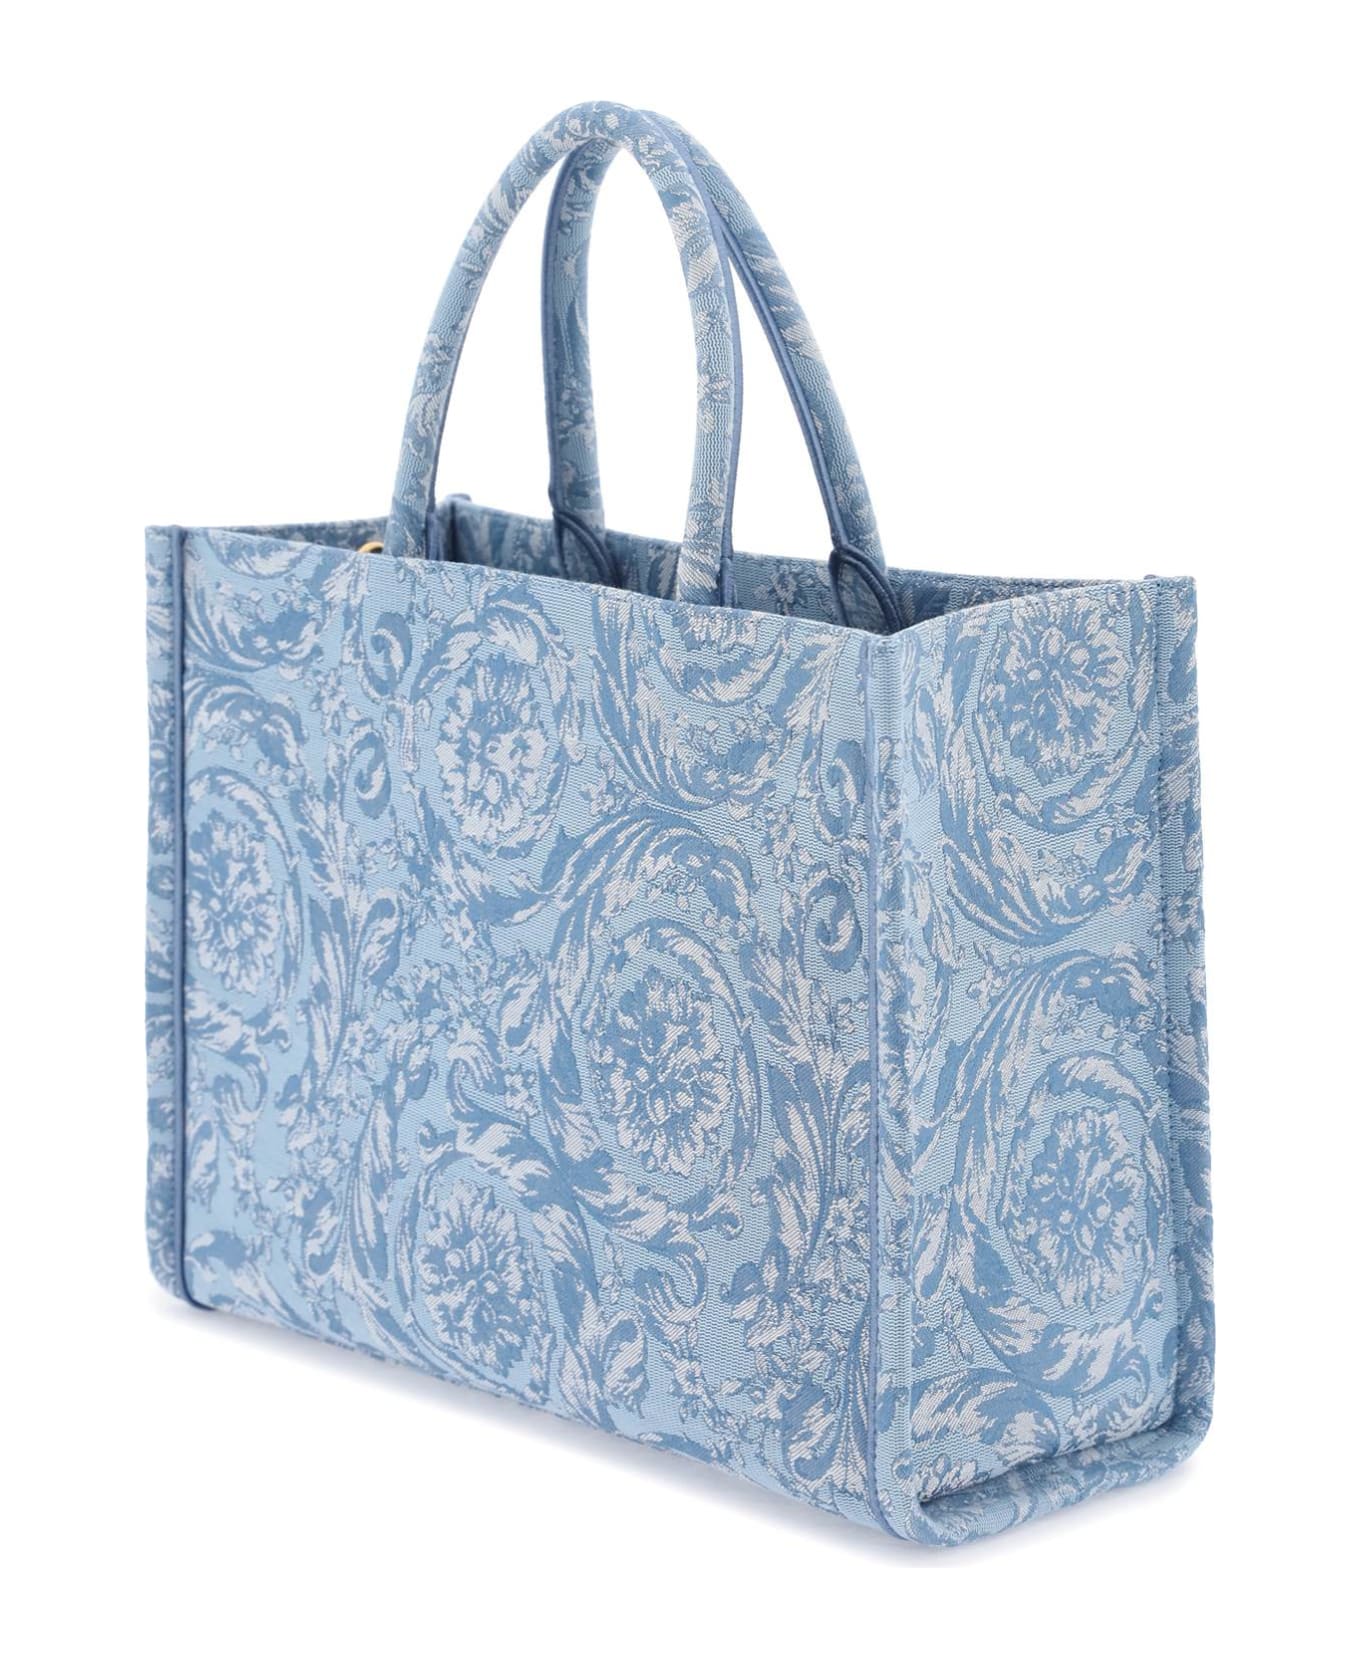 Versace Athena Logo Embroidered Tote Bag - BABY BLUE GENTIAN BLUE VE (Light blue) トートバッグ